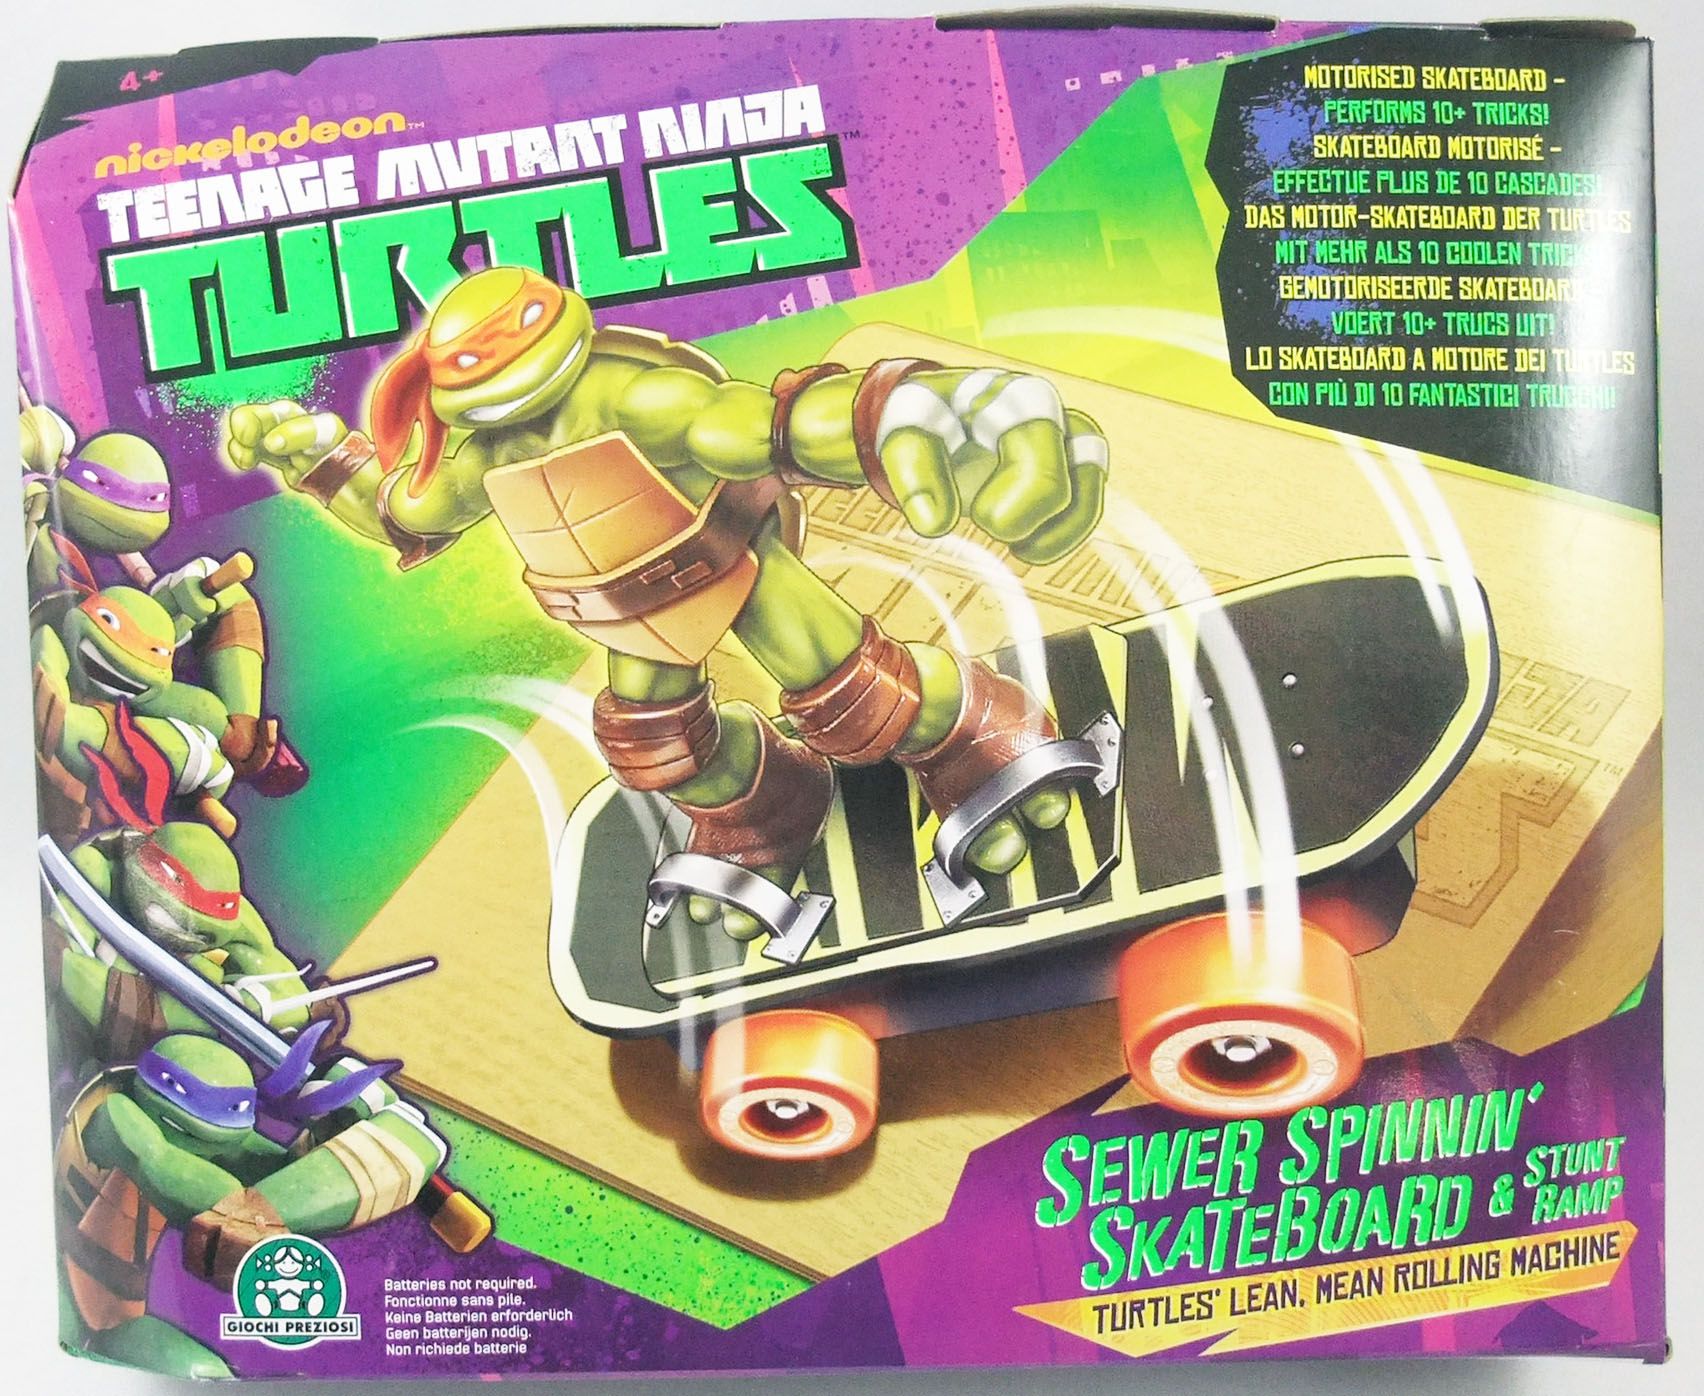 Mutant Ninja Turtles (Nickelodeon 2012) - Sewer Skateboard & Stunr Ramp